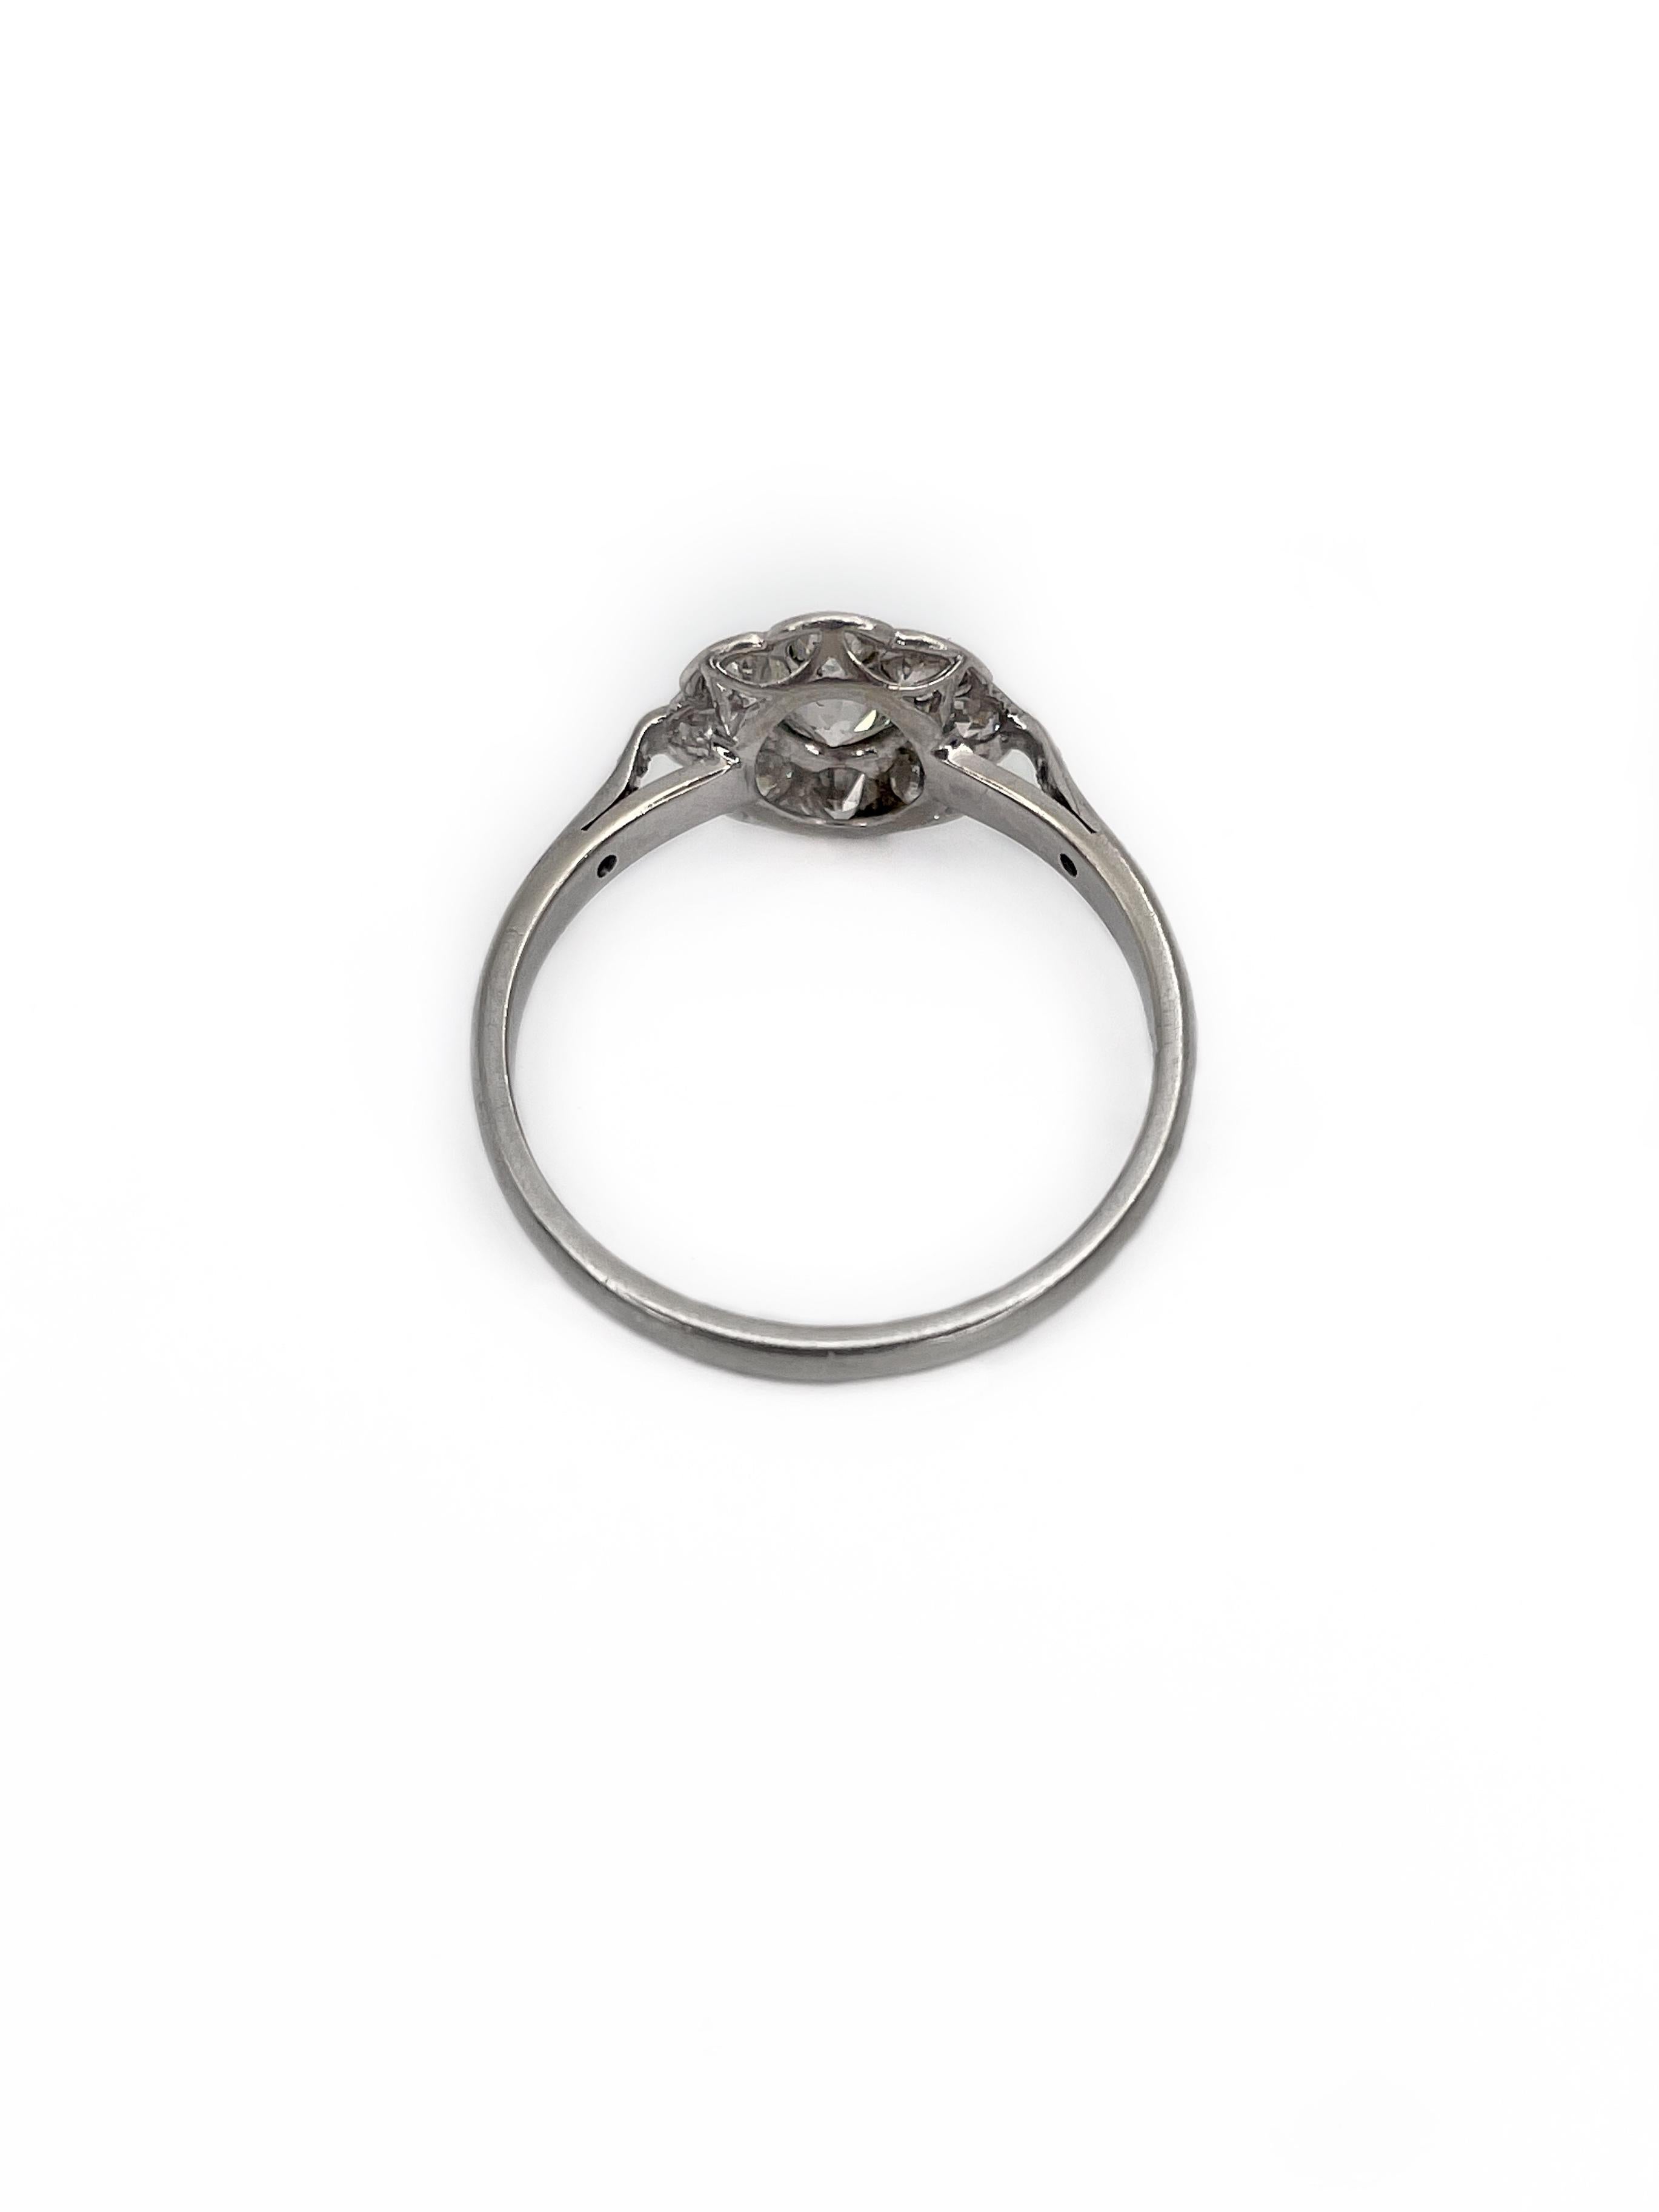 8 carat christian cut vintage engagement ring price